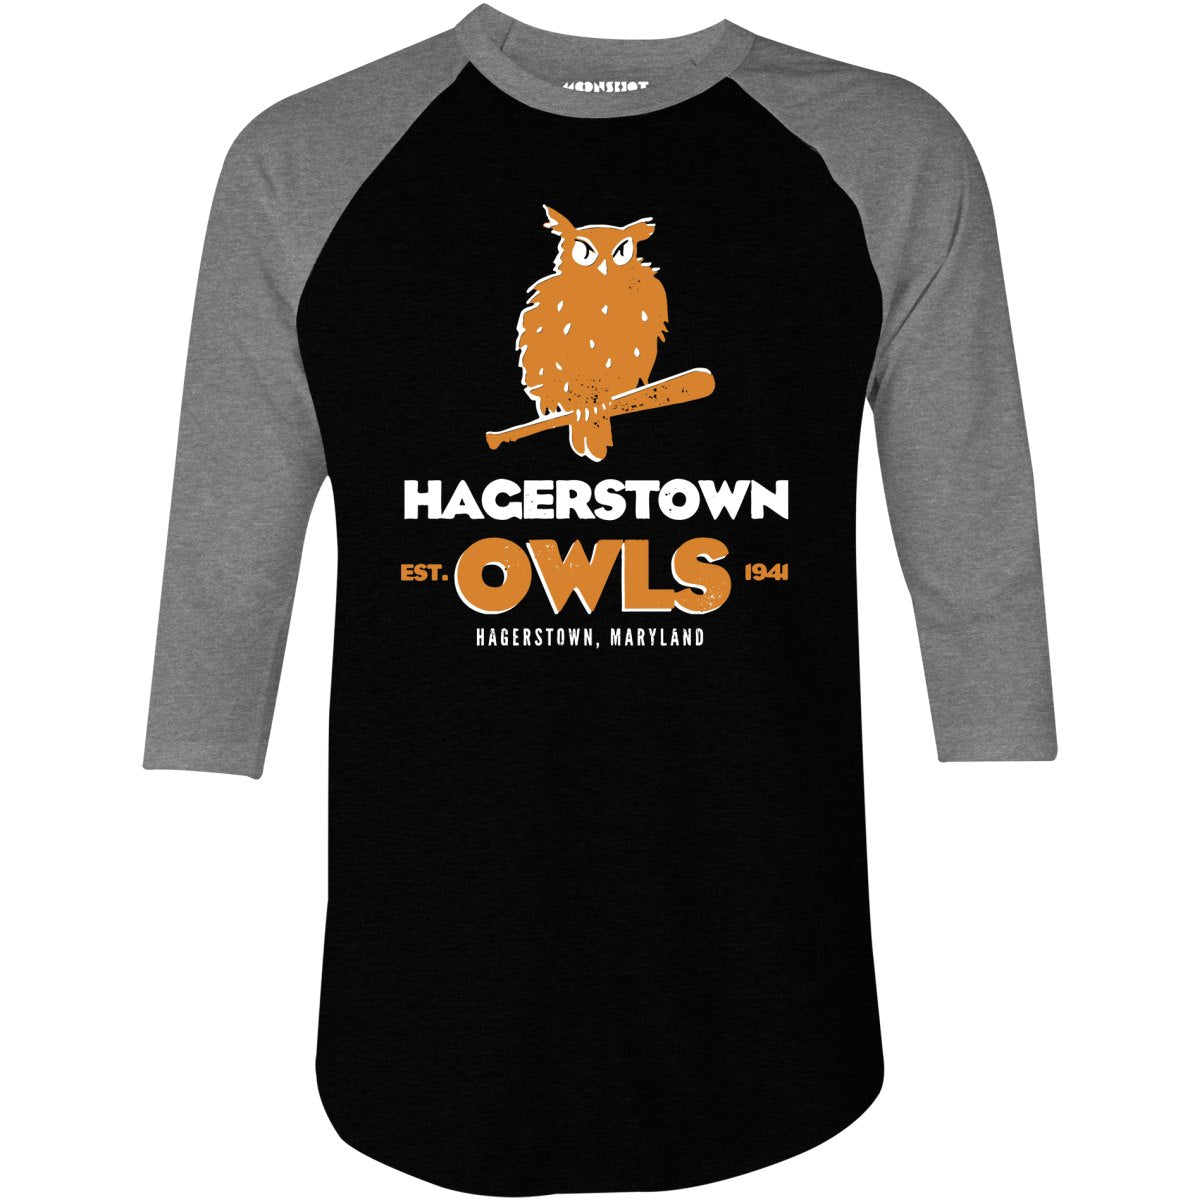 Hagerstown Owls - Maryland - Vintage Defunct Baseball Teams - 3/4 Sleeve Raglan T-Shirt